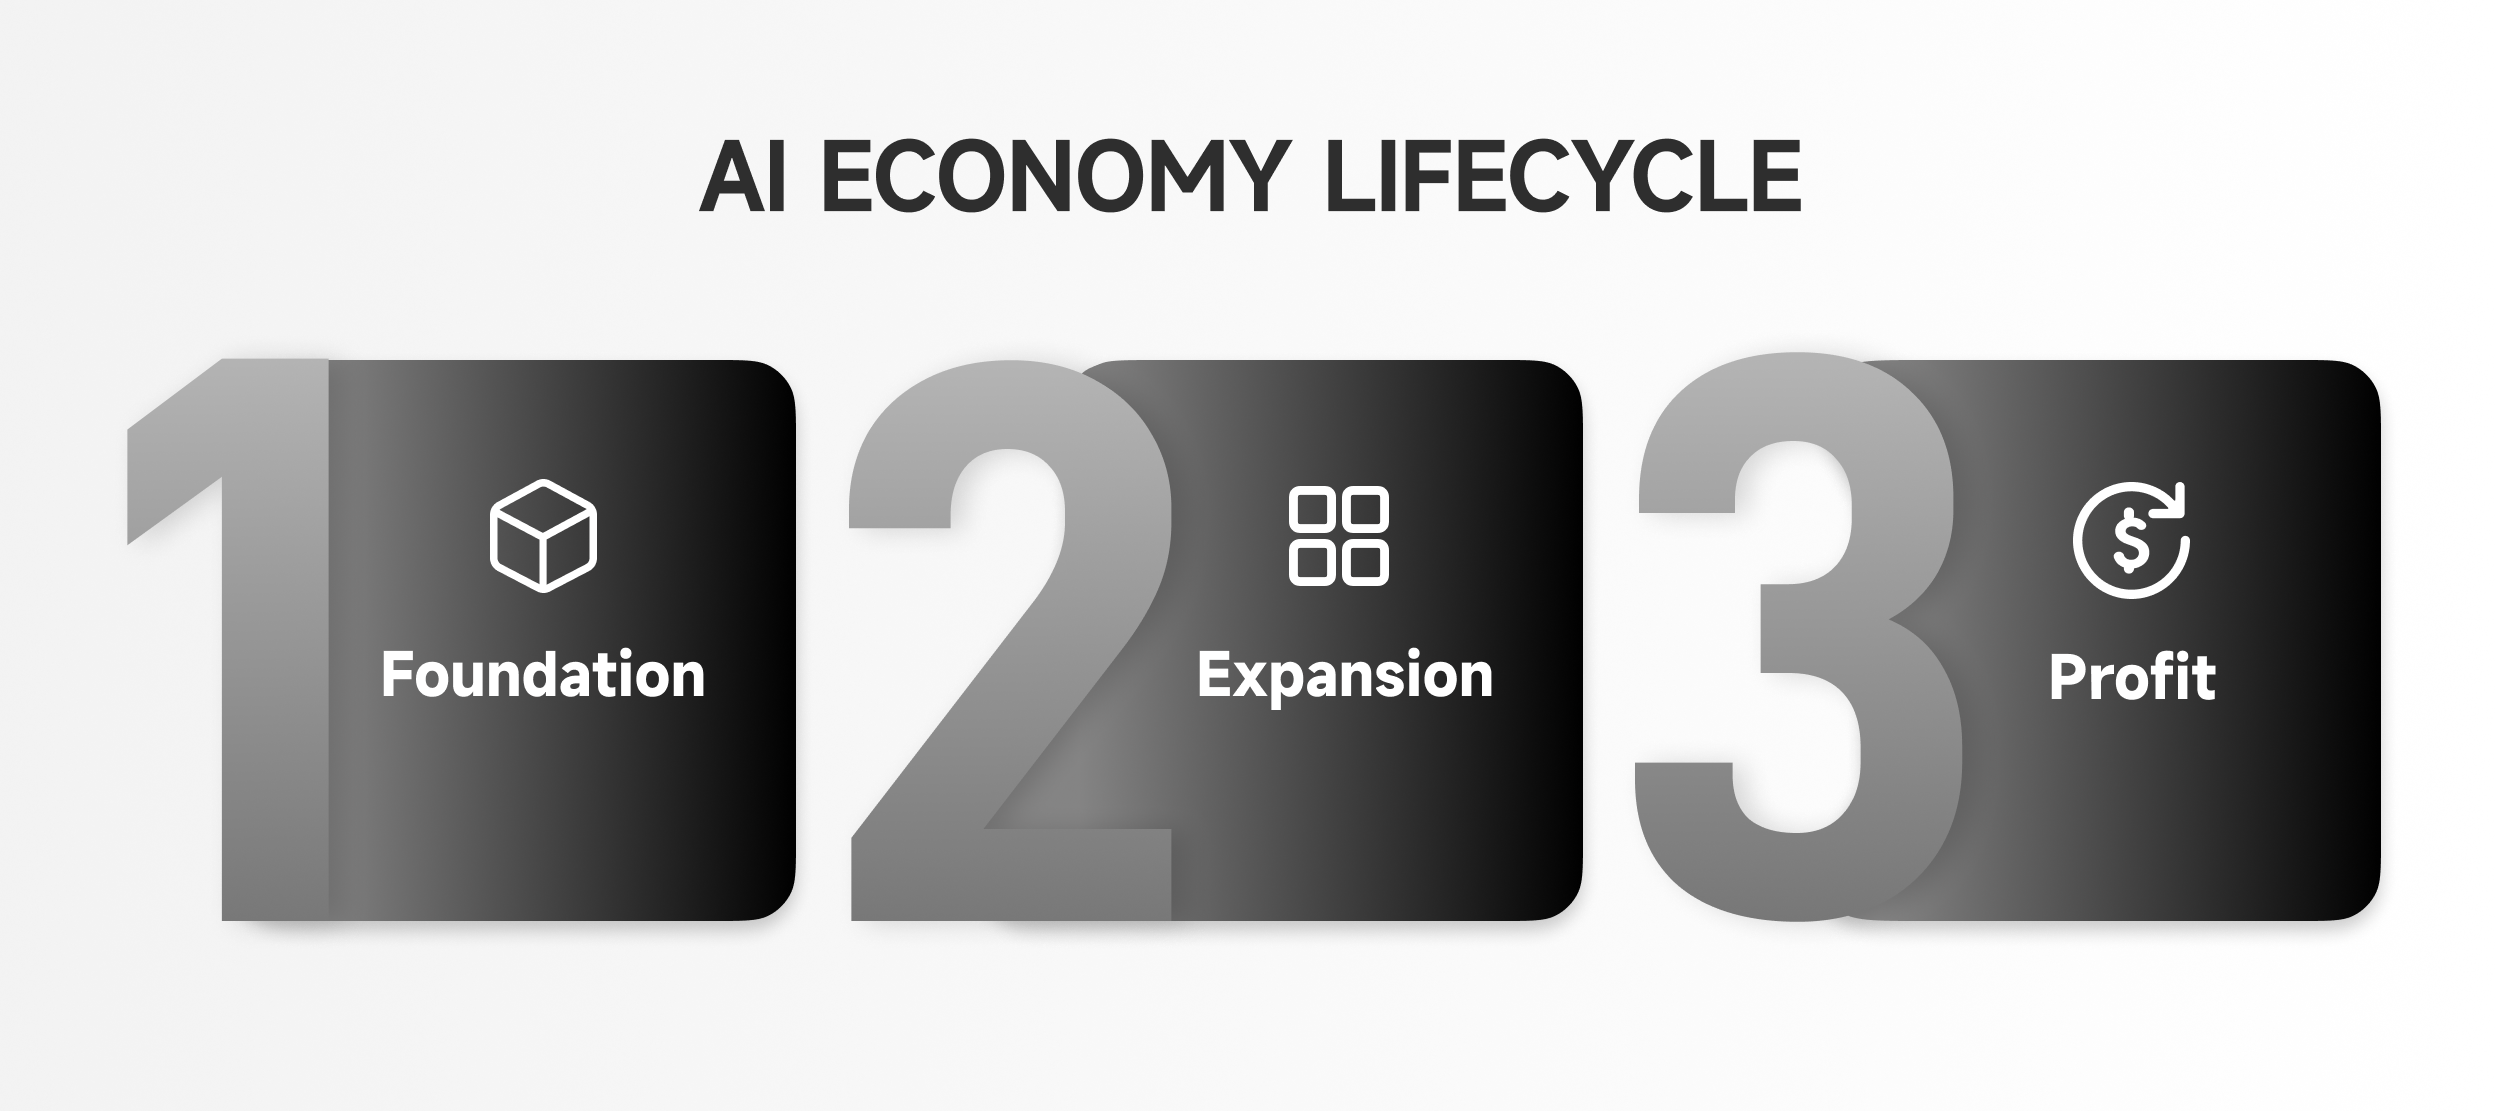 AI Economy Lifecycle by MagnetAI